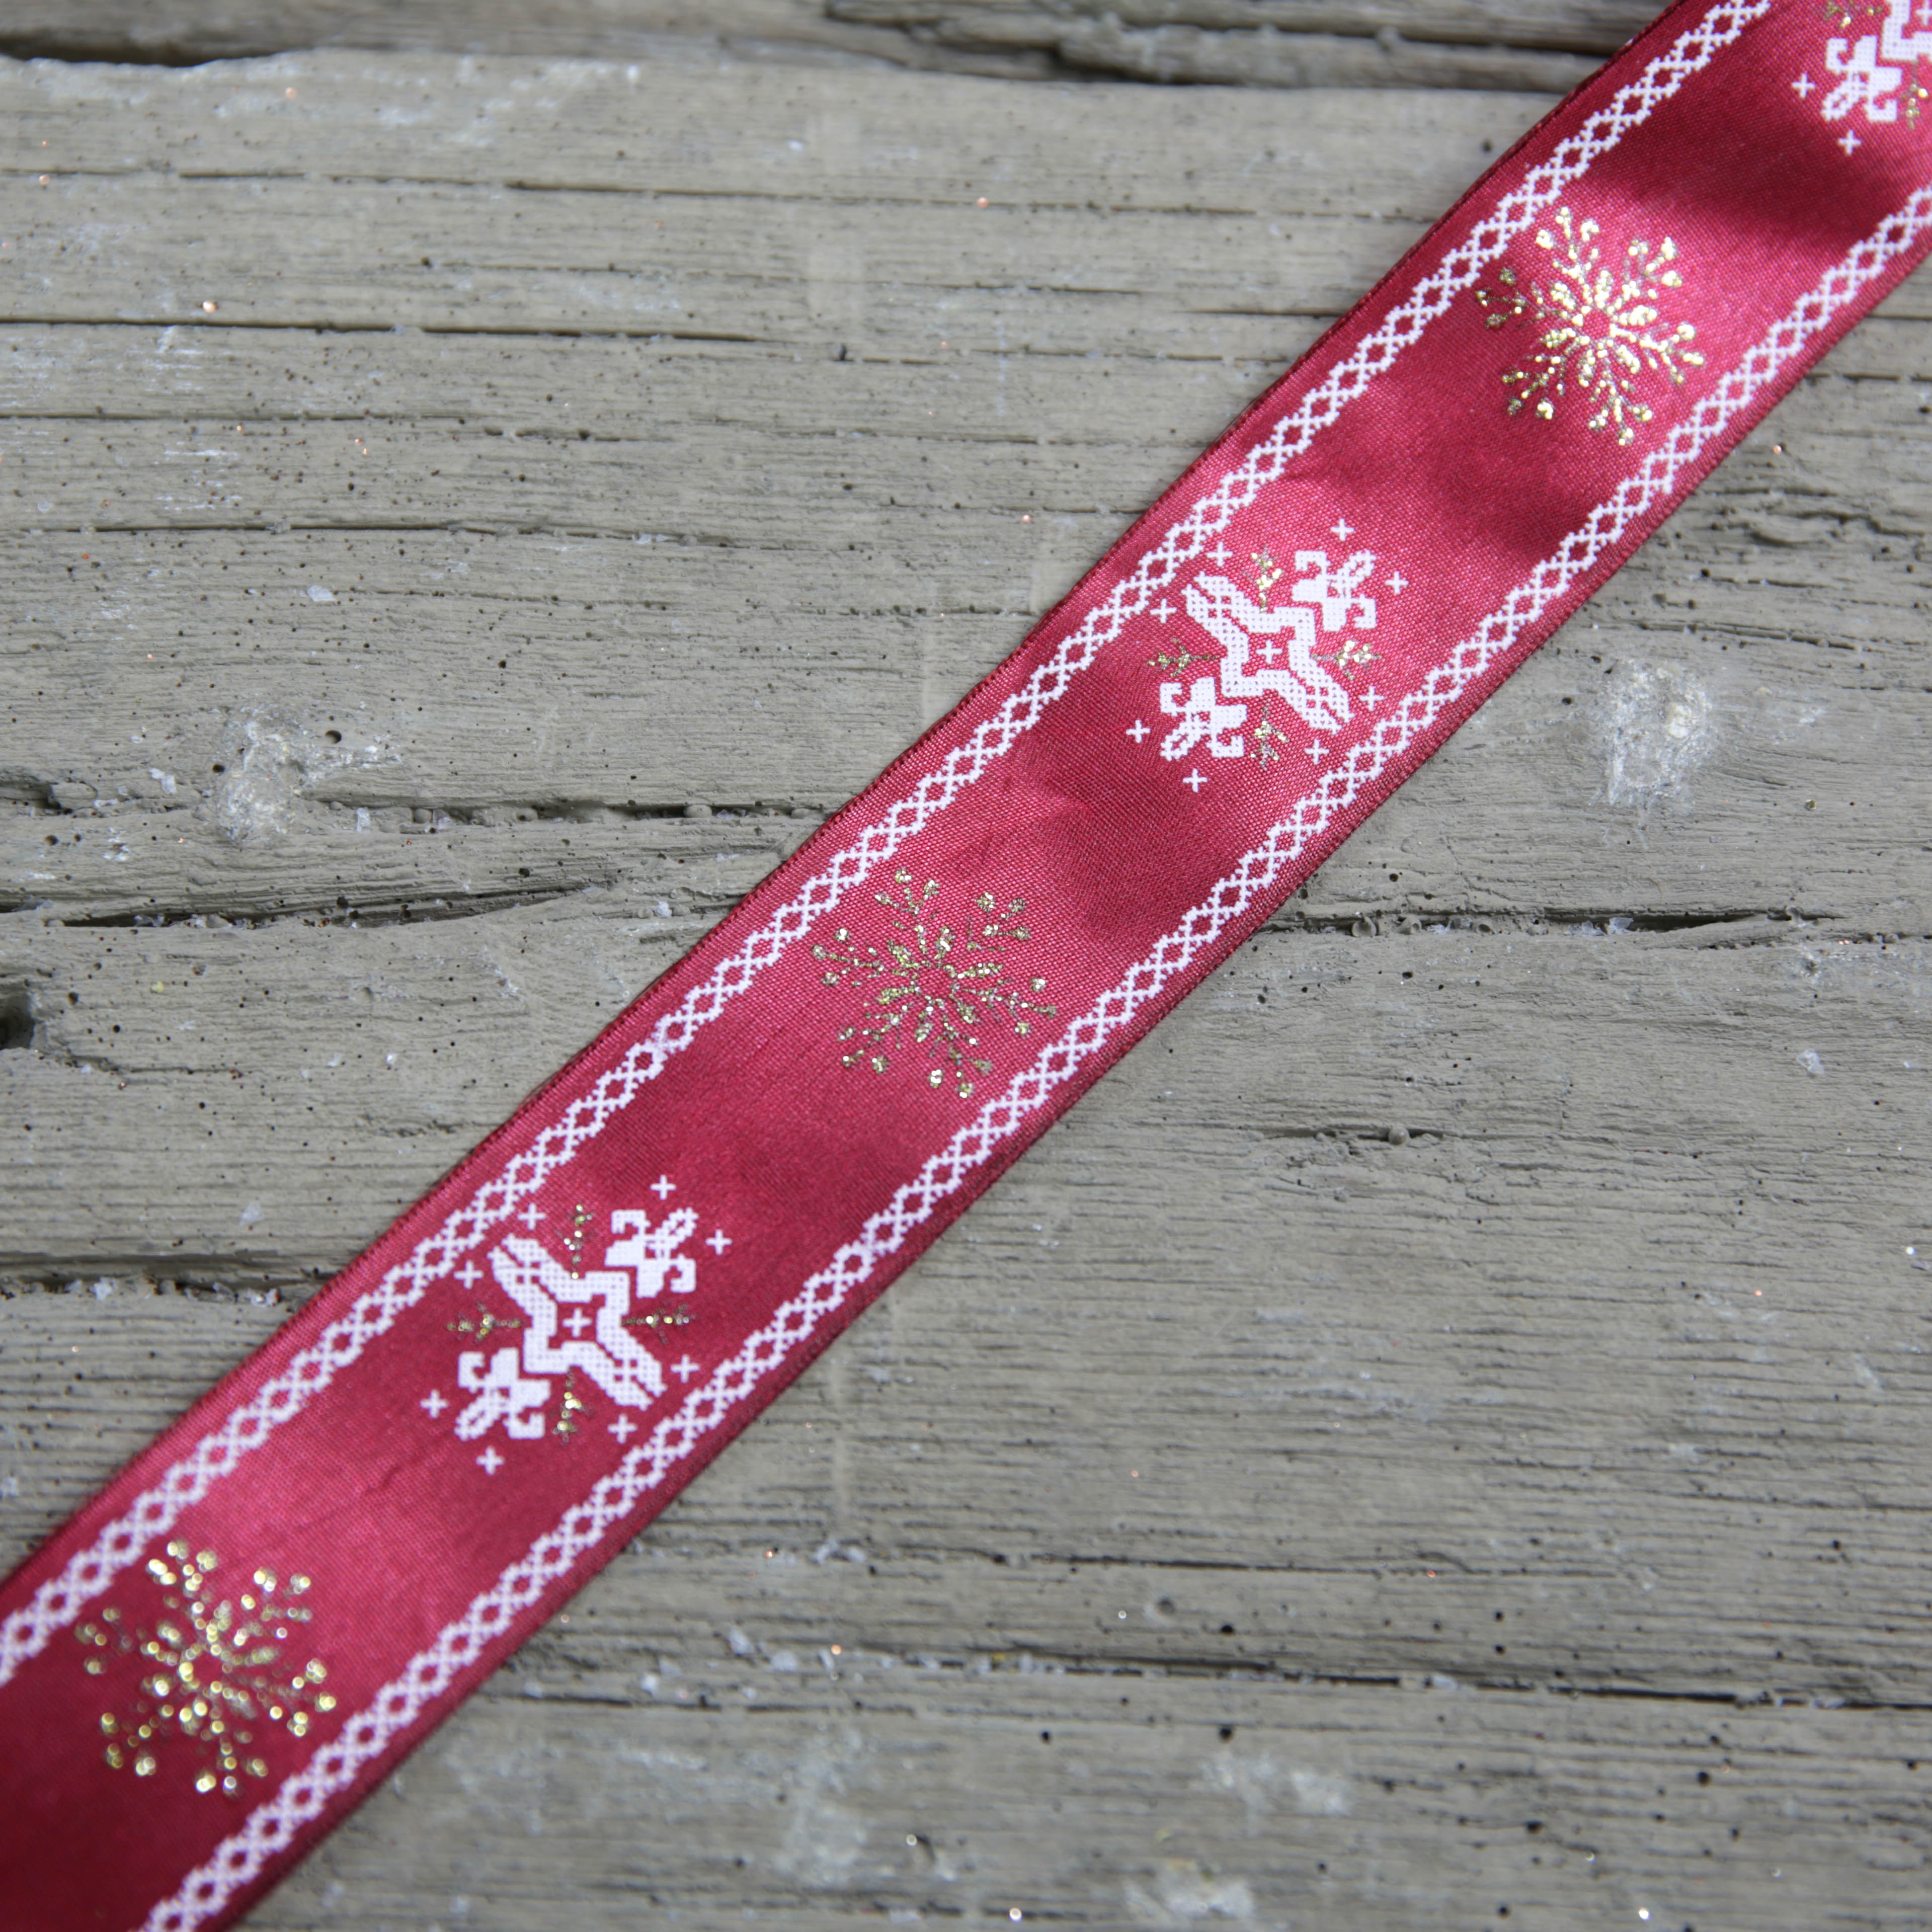 Christmas Print Rustic Ribbon 2.5m Burgundy - 3 Designs Available